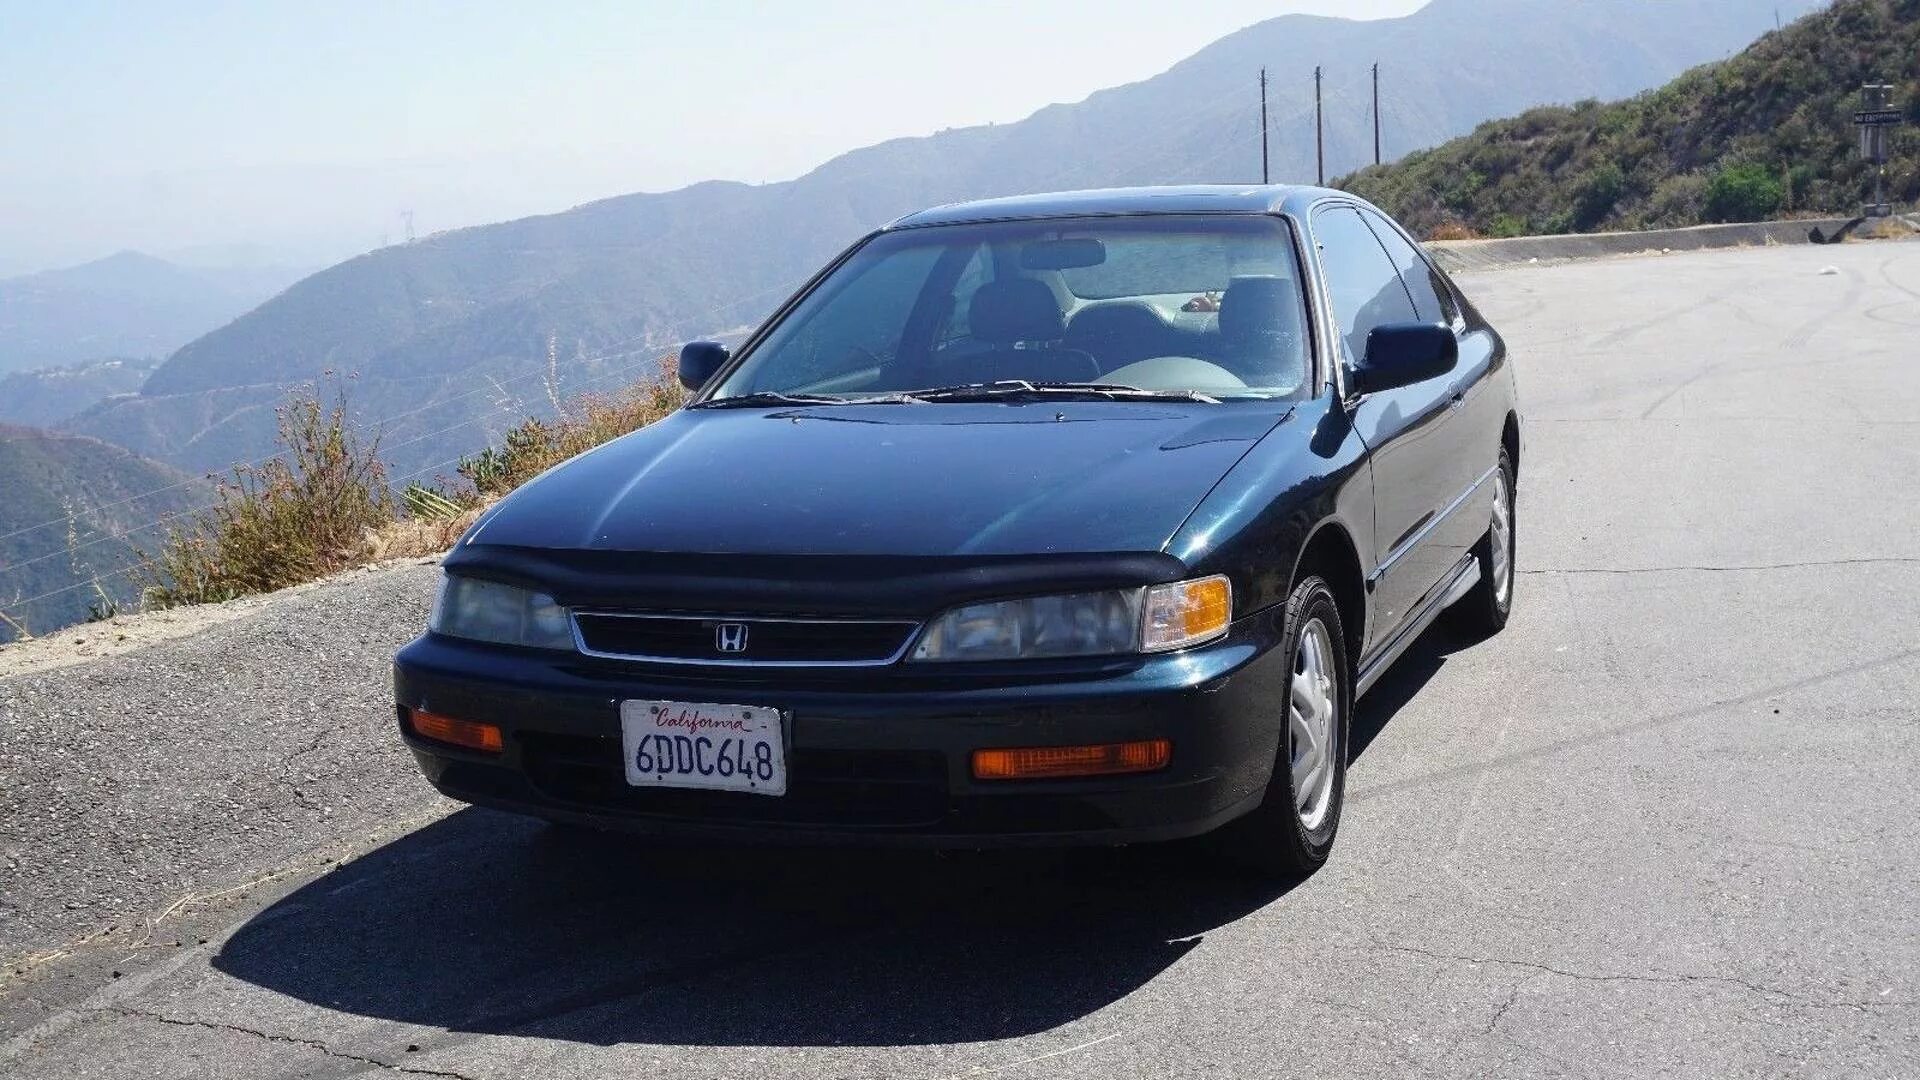 Honda Accord 1996 года. Хонда Аккорд Старая модель 1996. Honda Accord IV 1989 - 1994 седан. Honda Accord машина 1997. Старые honda